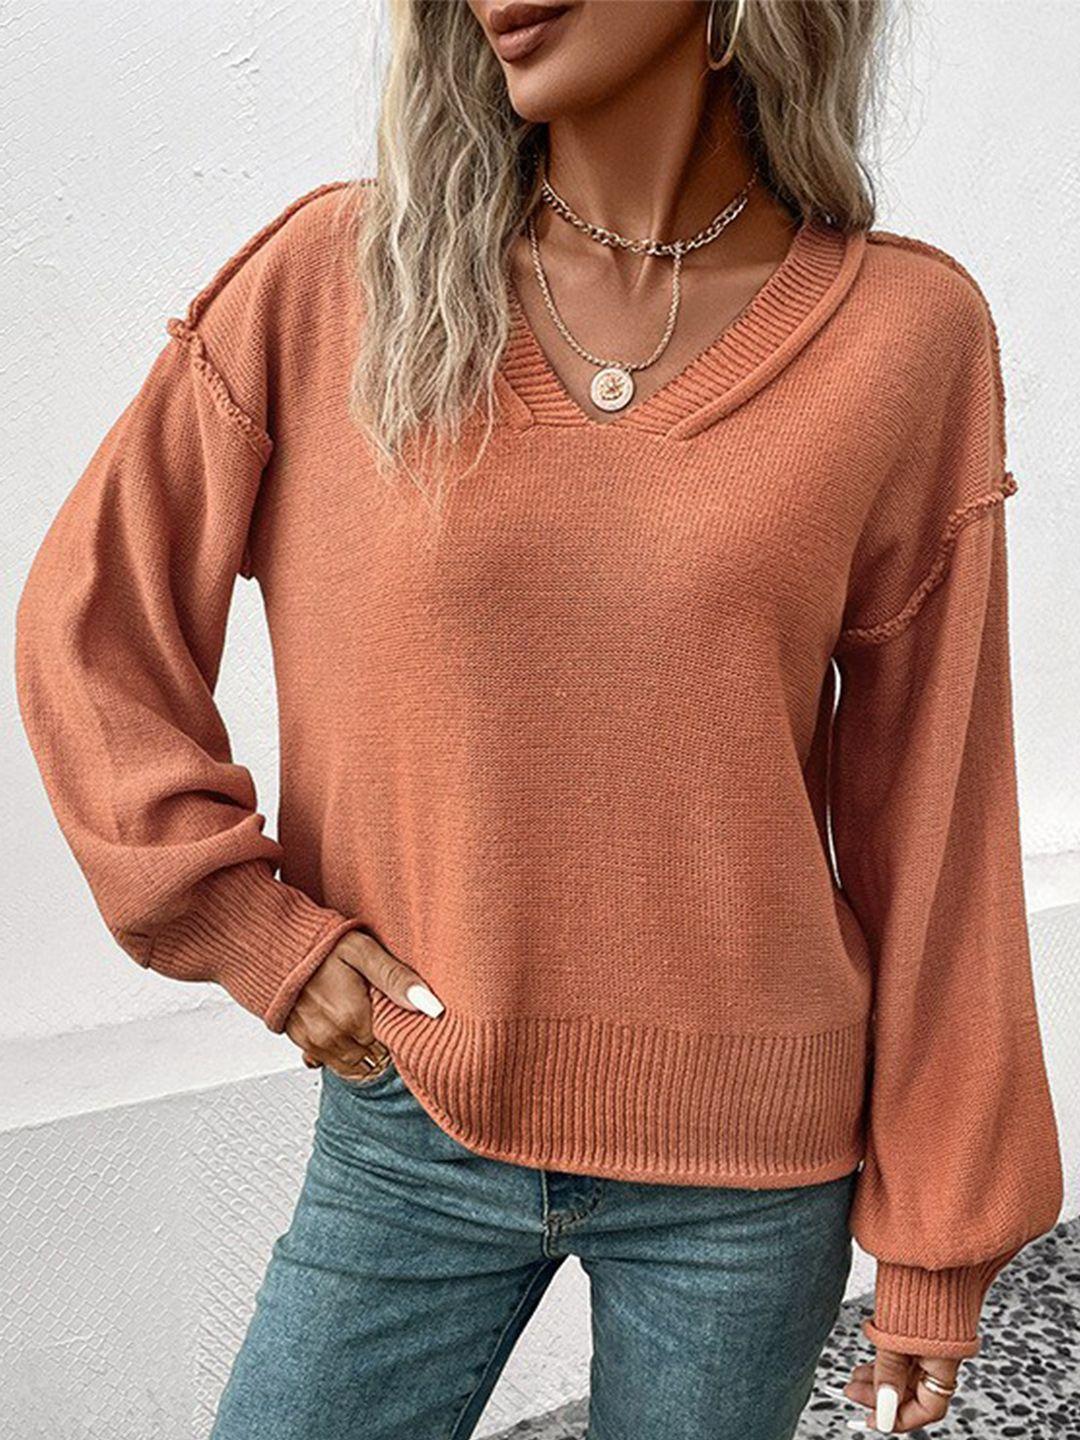 stylecast-orange-v-neck-acrylic-pullover-sweater